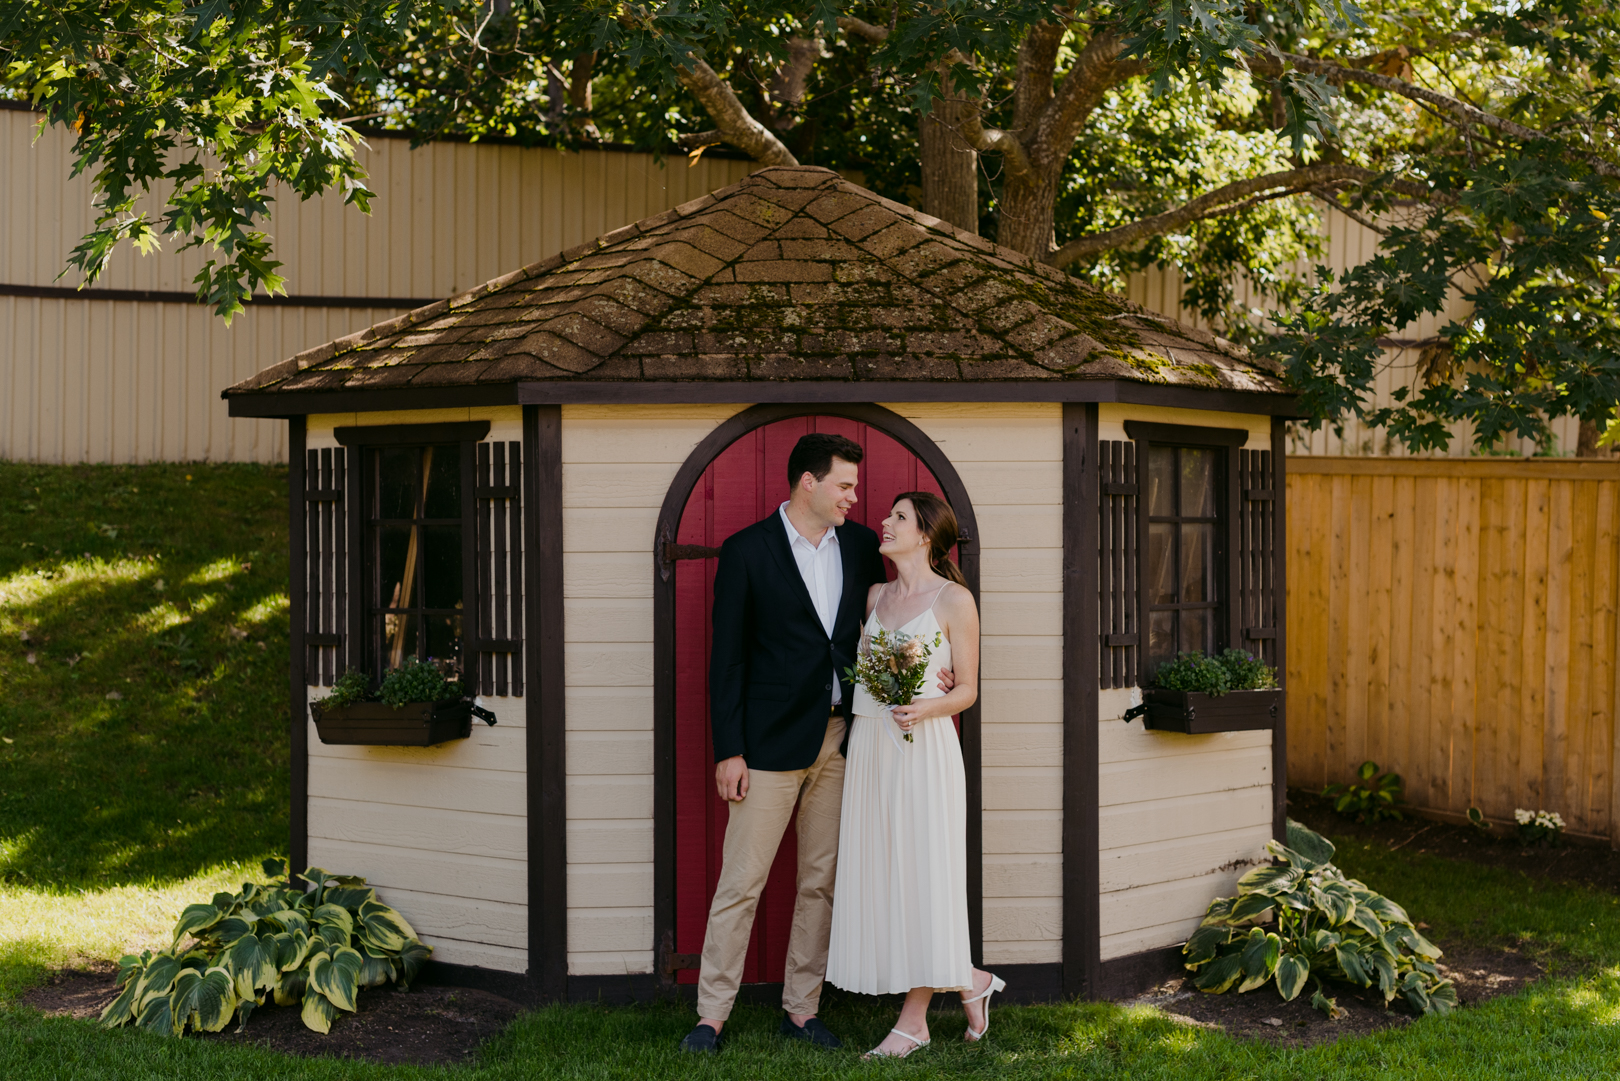 bride and groom in front of red shed door in backyard